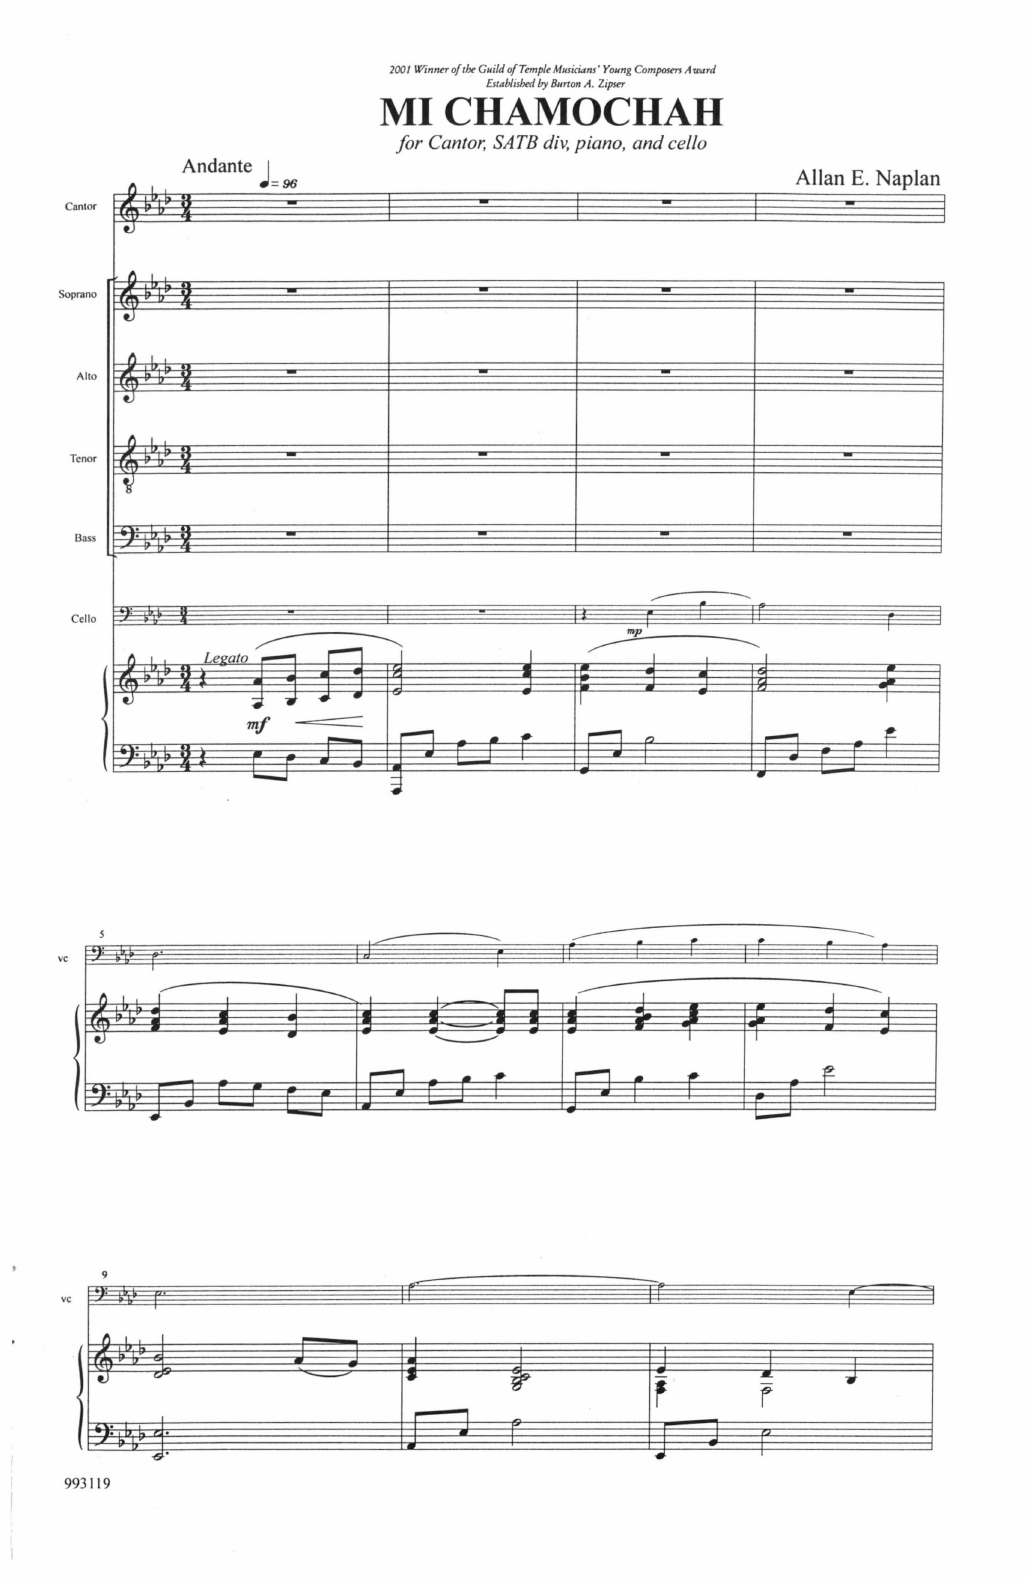 Allan Naplan Mi Chamochah (Who Is Like You) Sheet Music Notes & Chords for SATB Choir - Download or Print PDF